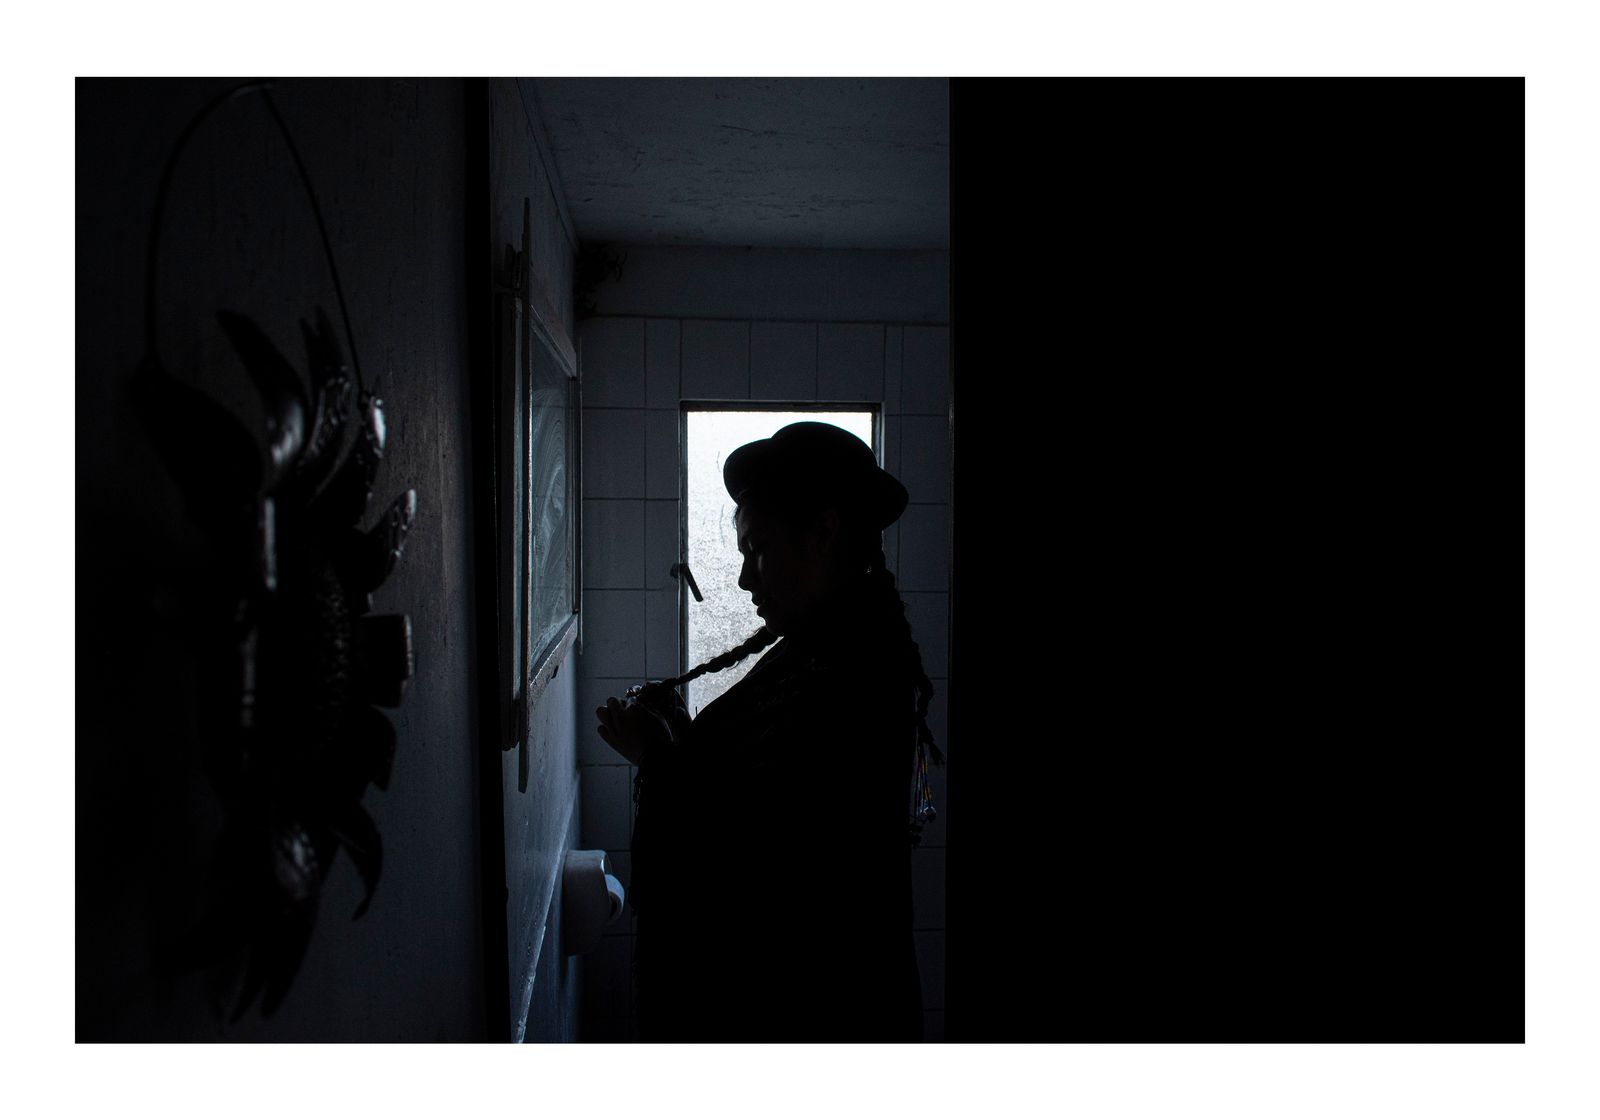 © Sara Aliaga - Image from the Cholita tenias que ser photography project